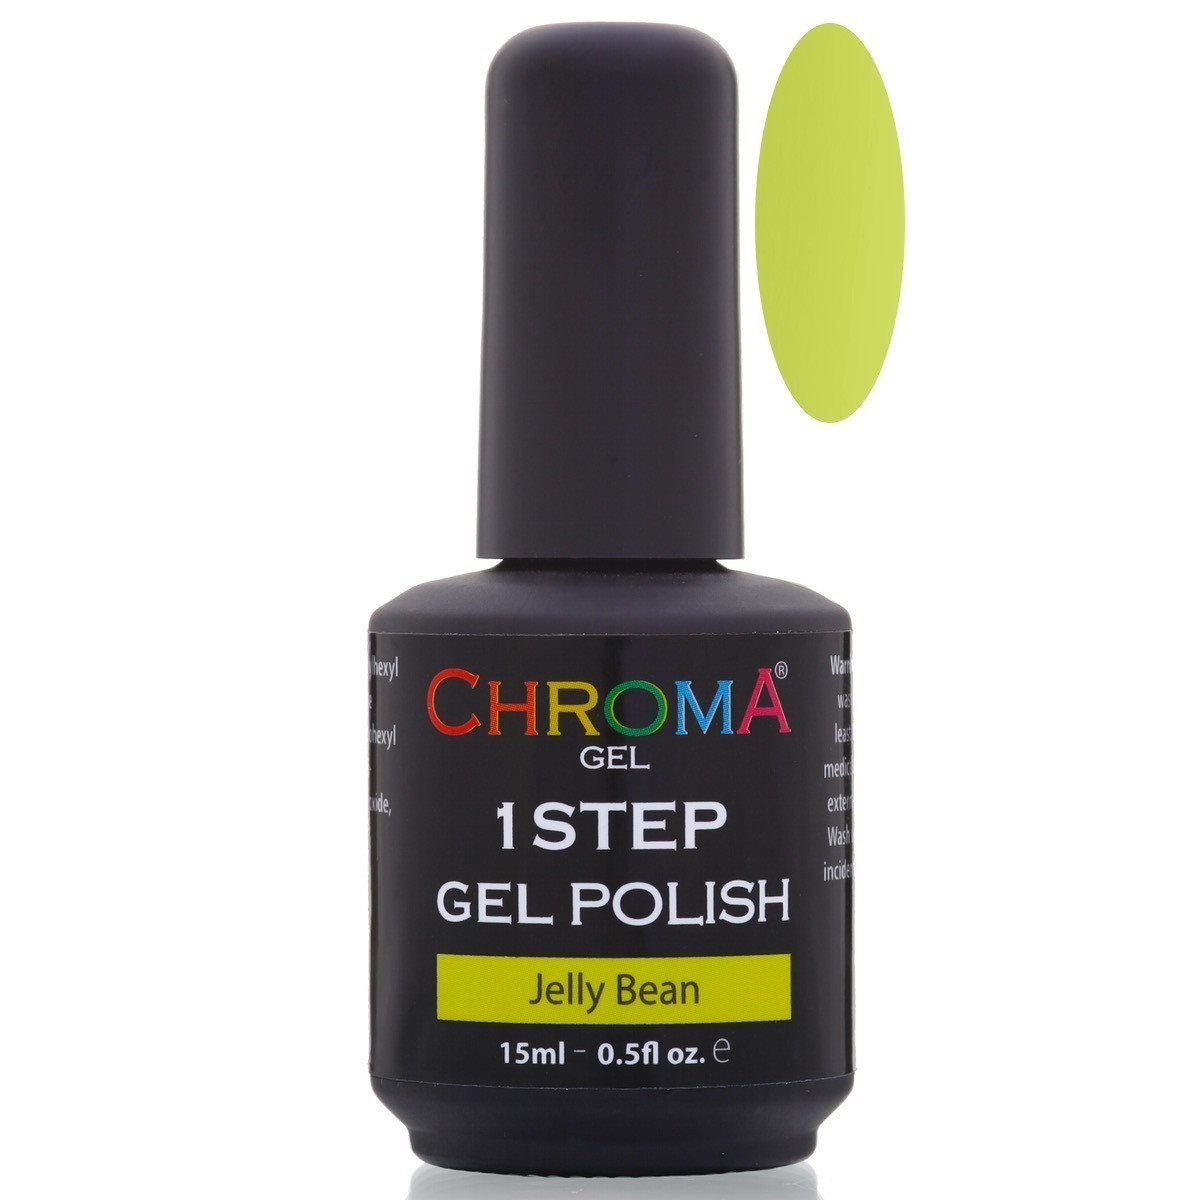 Chroma Gel 1 Step Neon Green/Yellow Gel Polish No.4 - beautyhair.co.ukChroma Gel